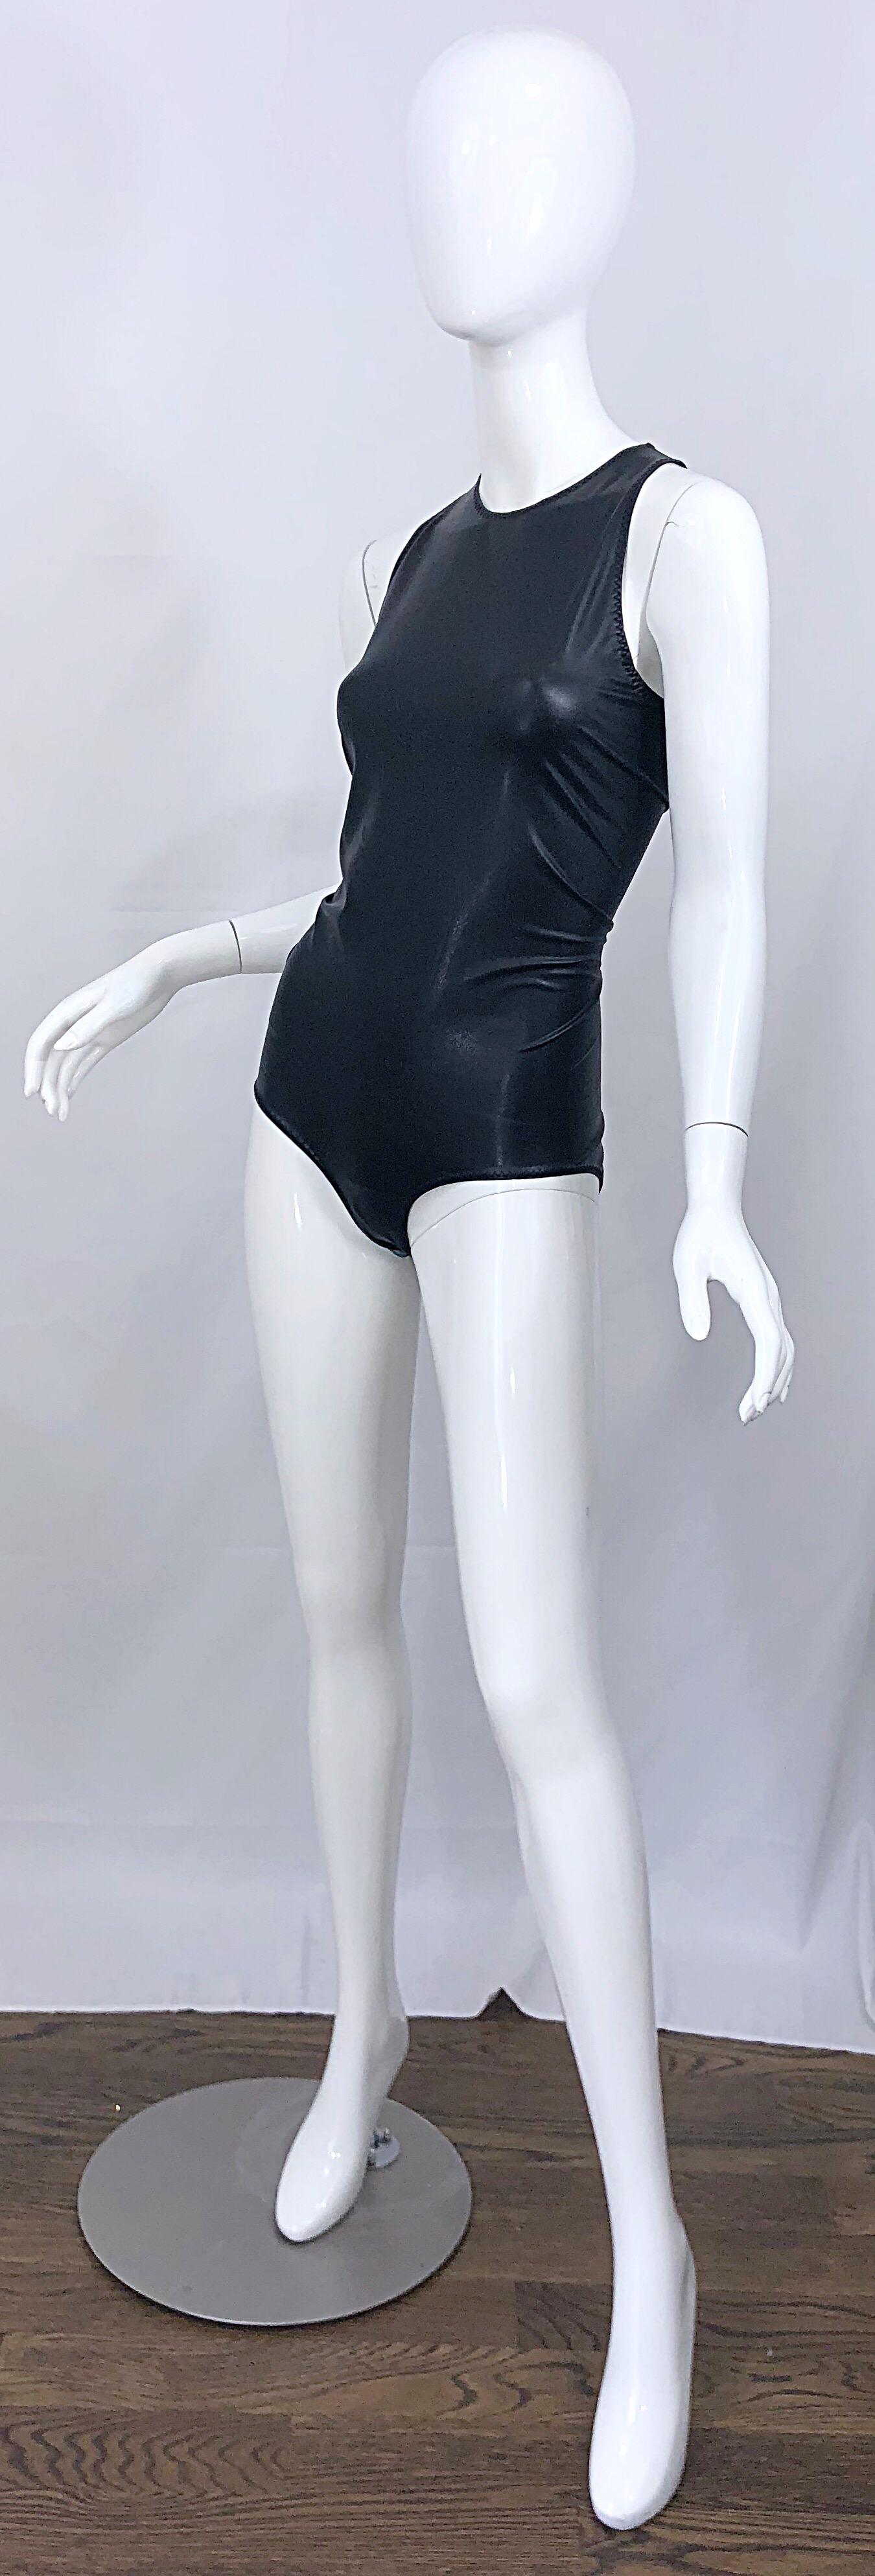 dominatrix body suit